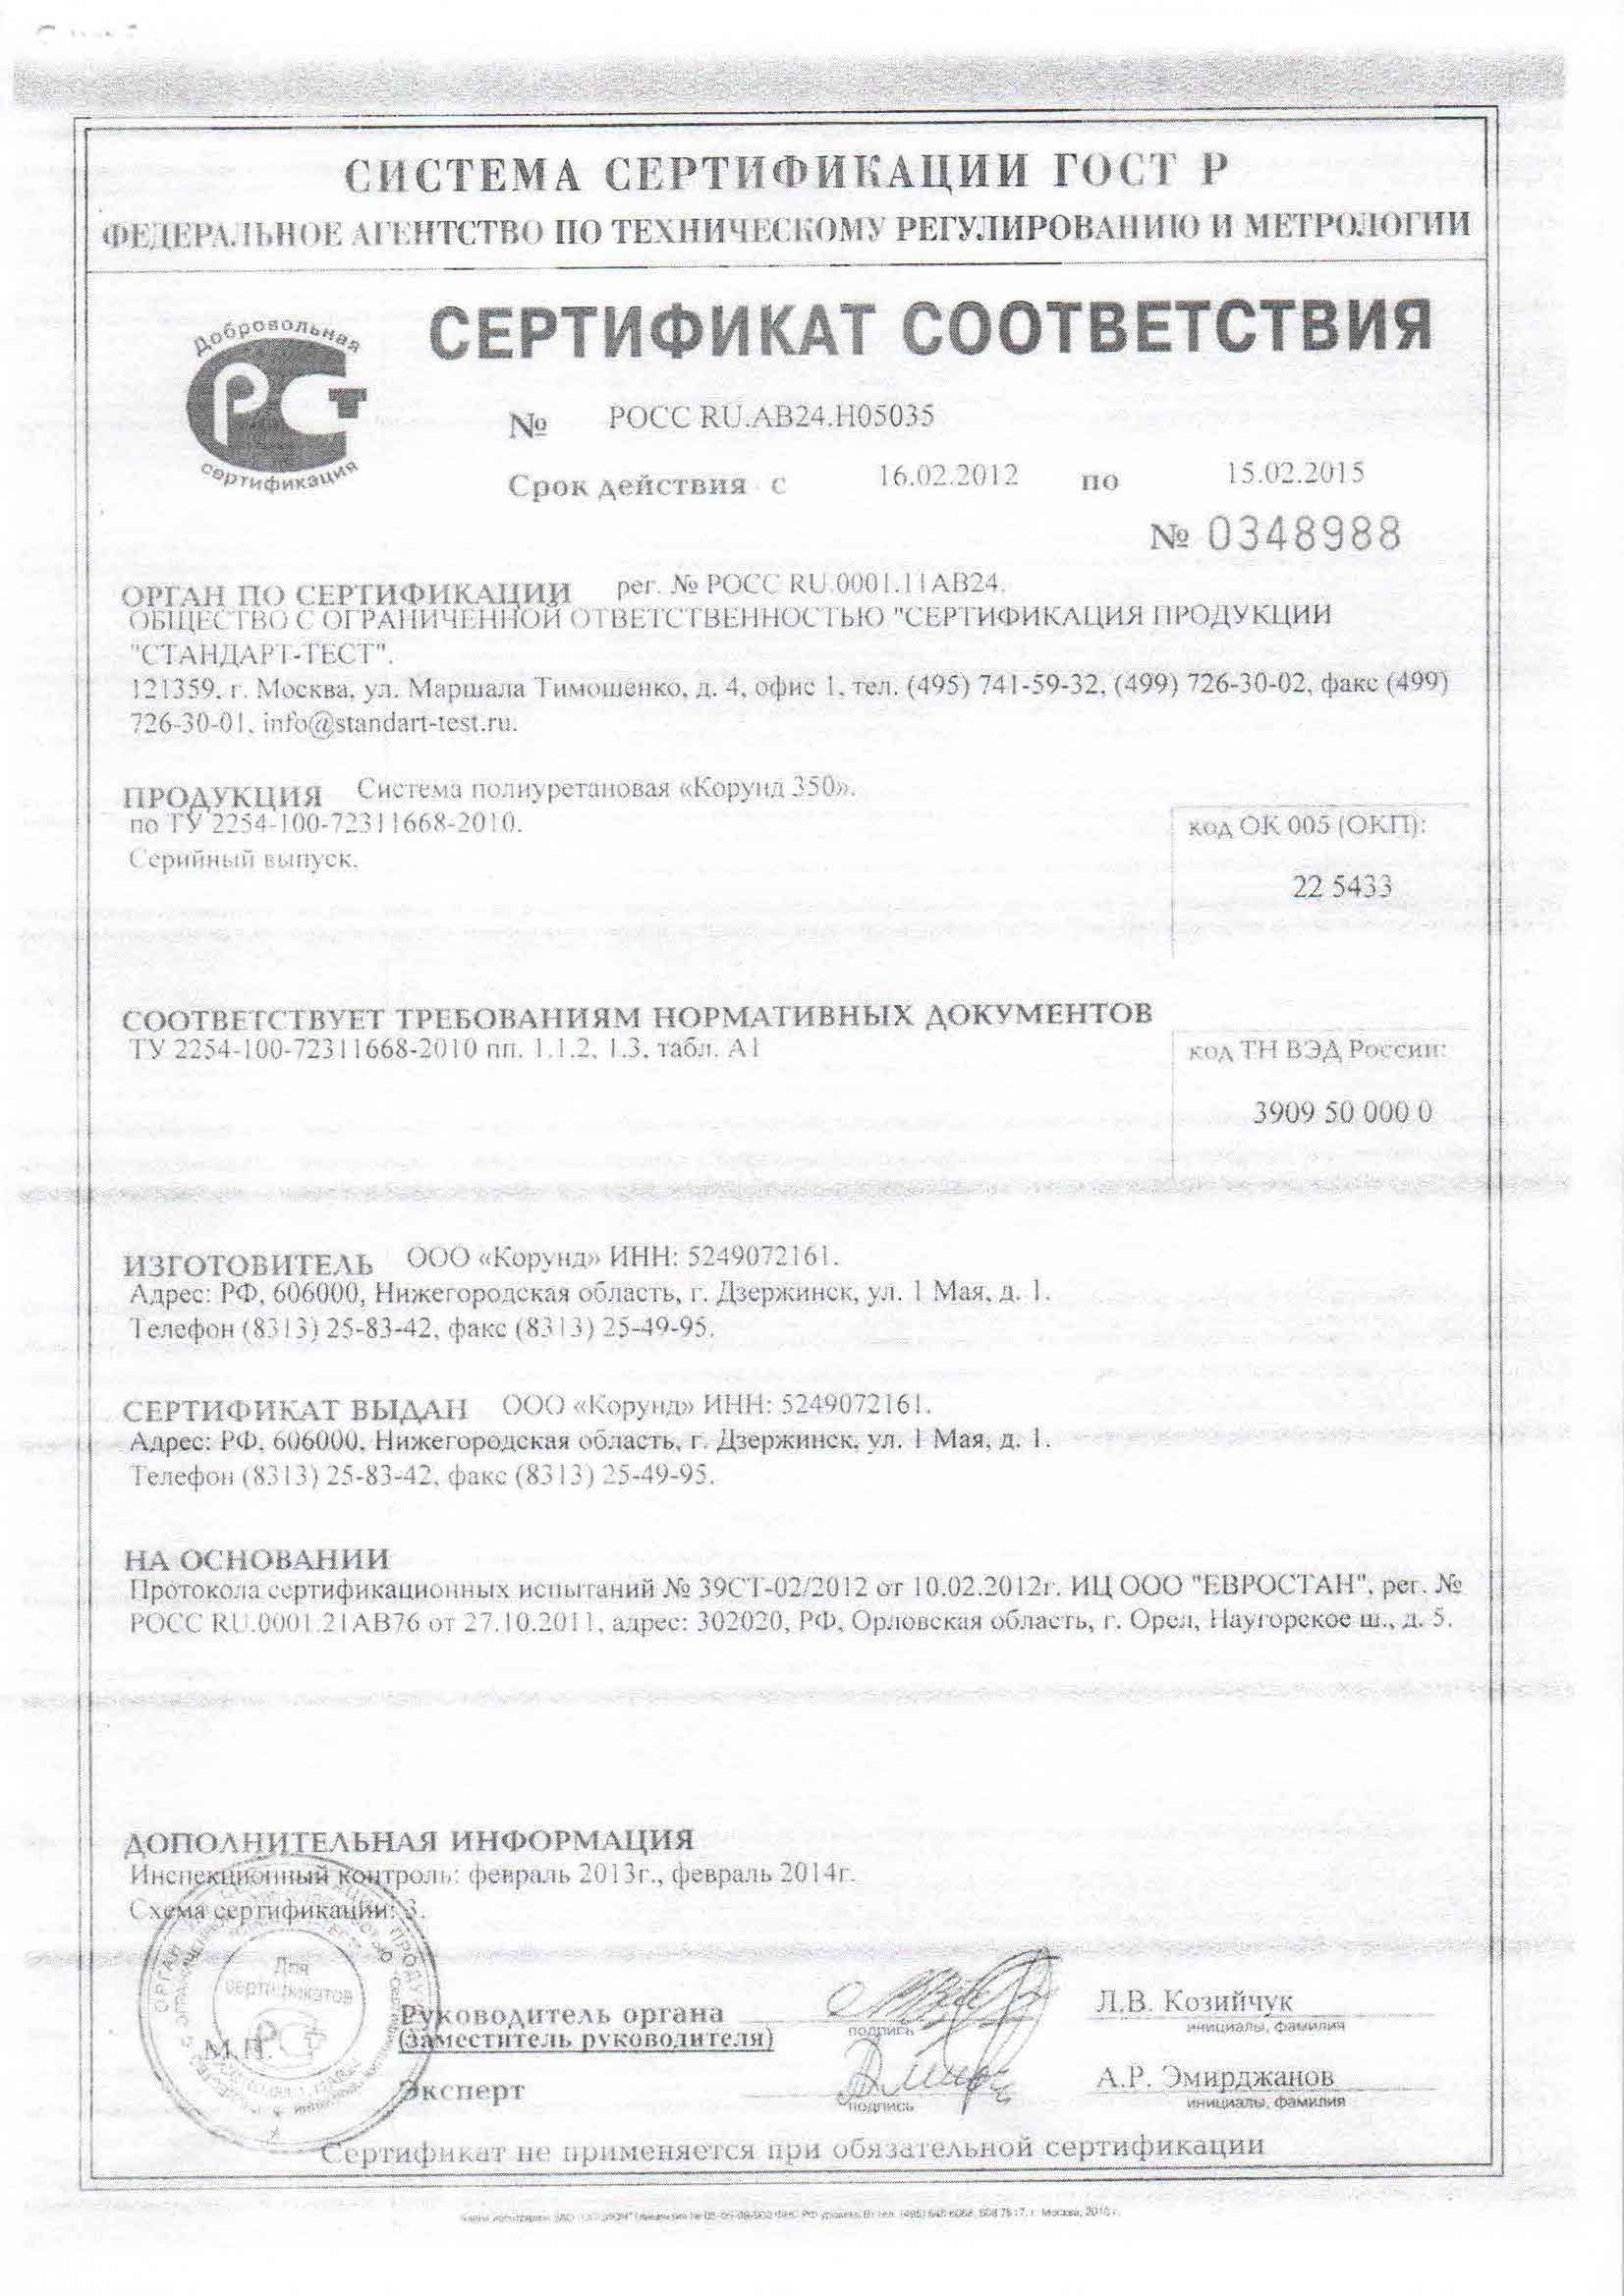 Получен сертификат соответствия на систему полиуретановую «Корунд 350».